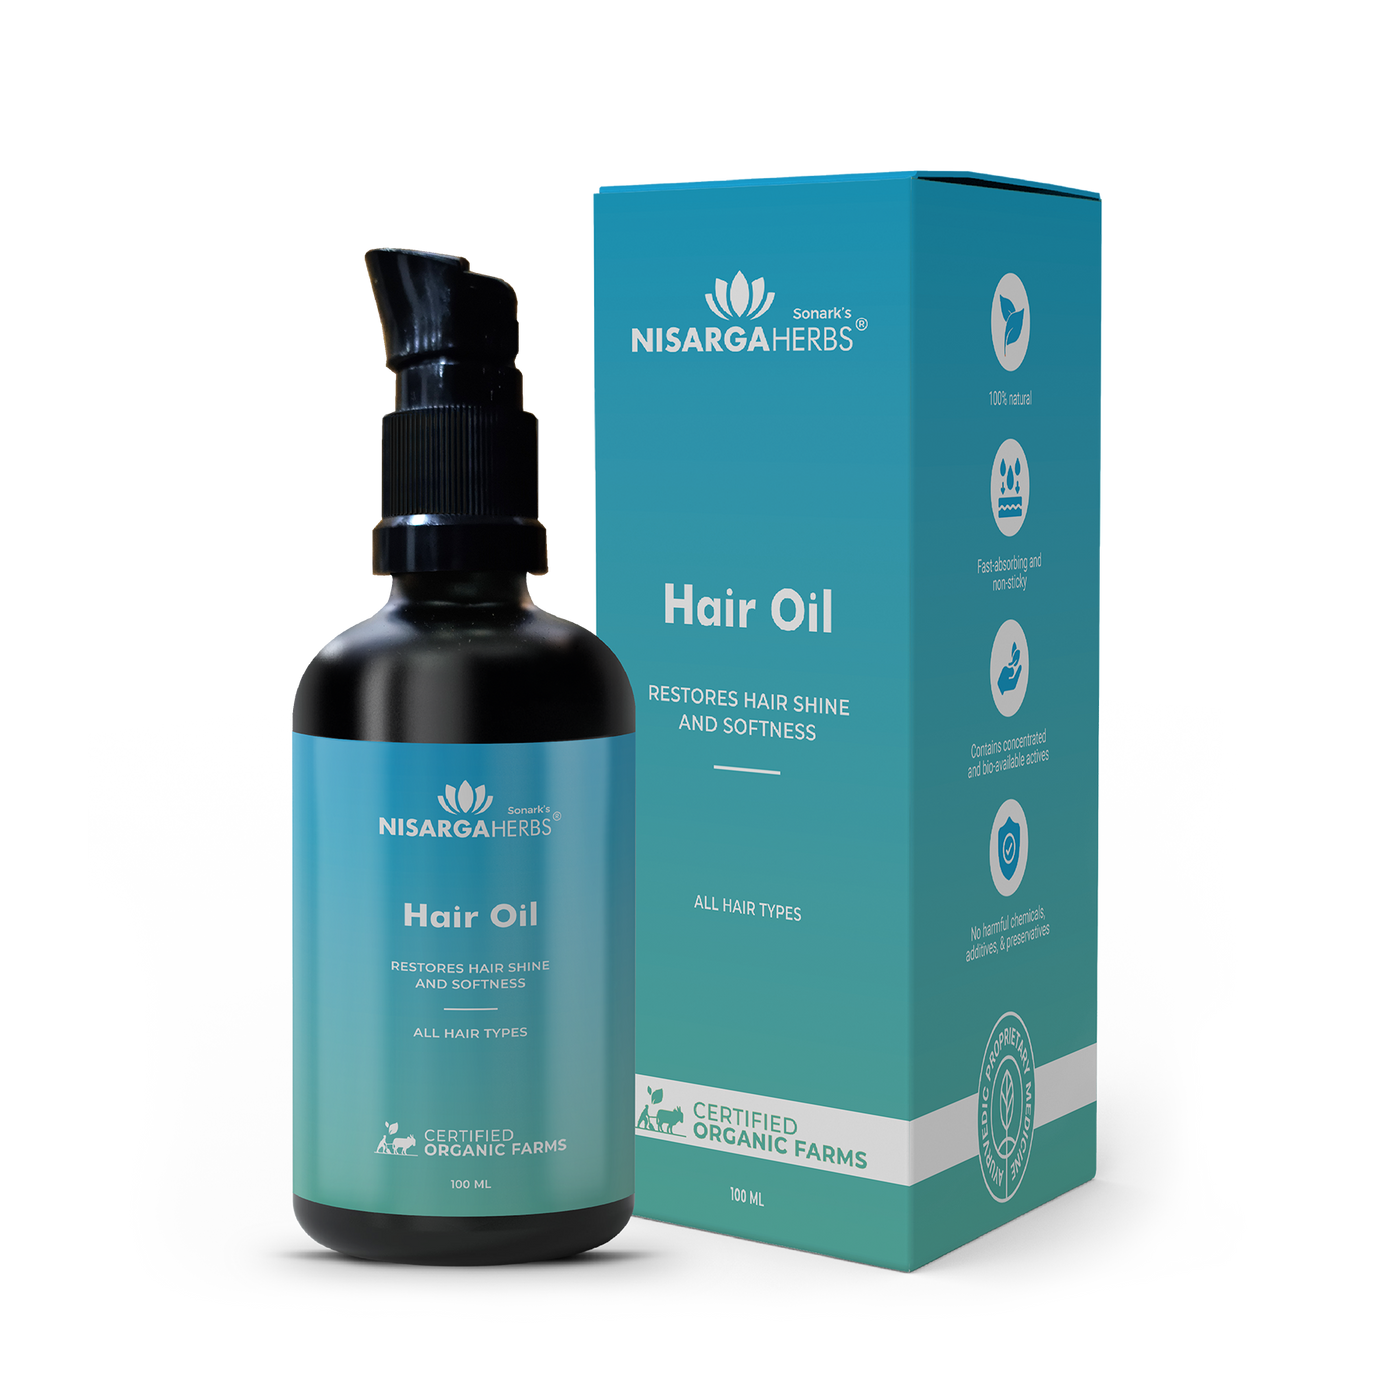 Hair Oil (100 ml) - Ayurvedic oil that treats major hair issues including hair fall, premature greying, dandruff etc